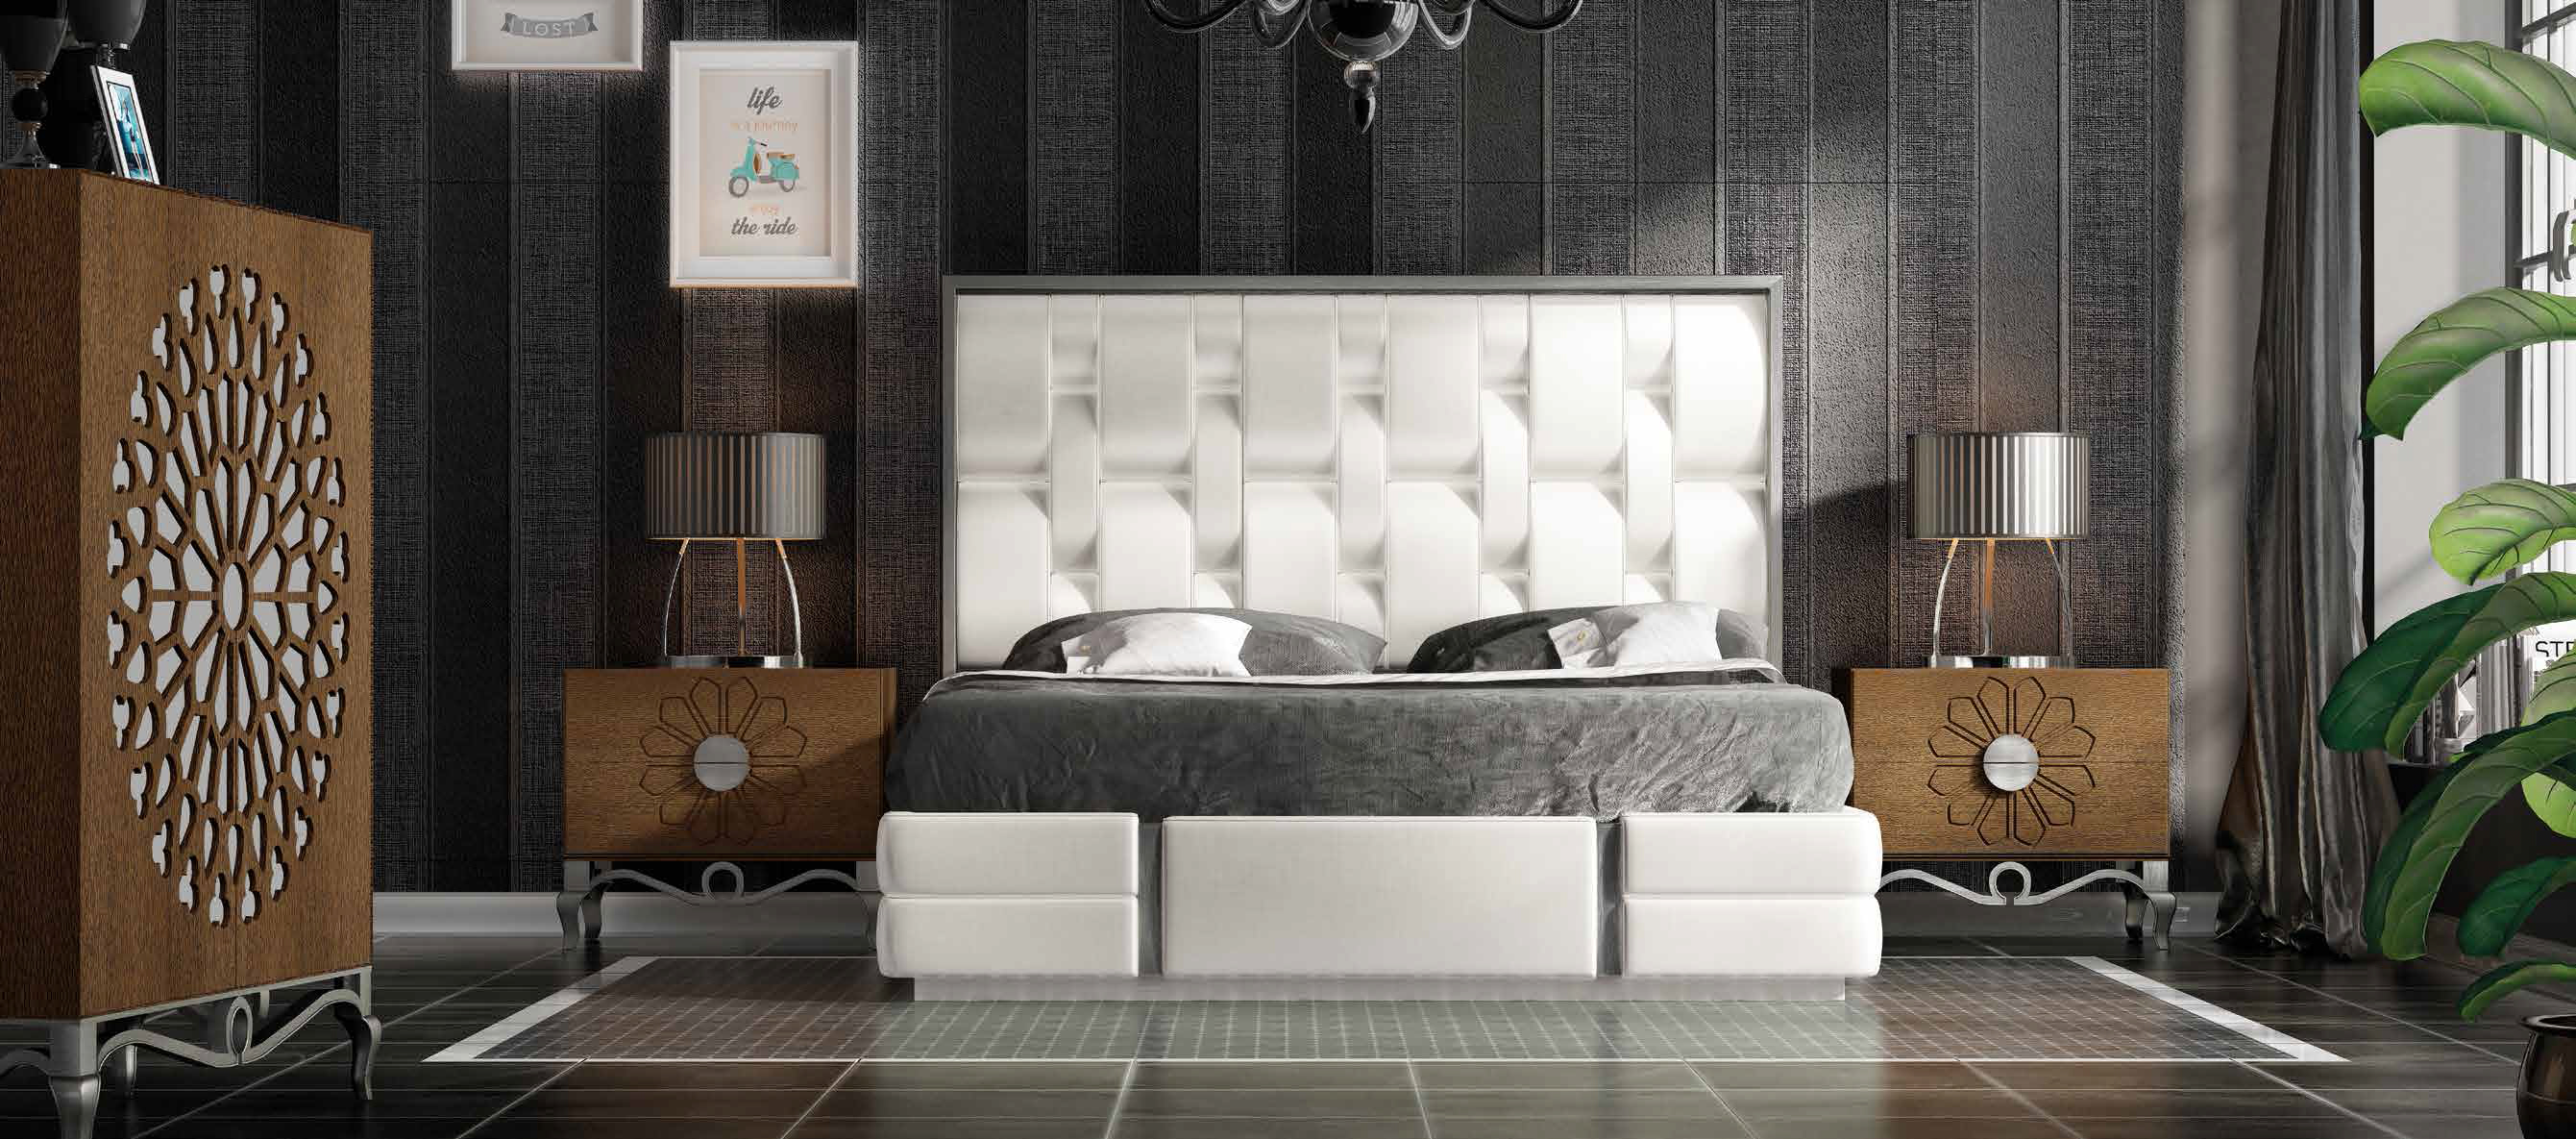 Bedroom Furniture Beds with storage DOR 57